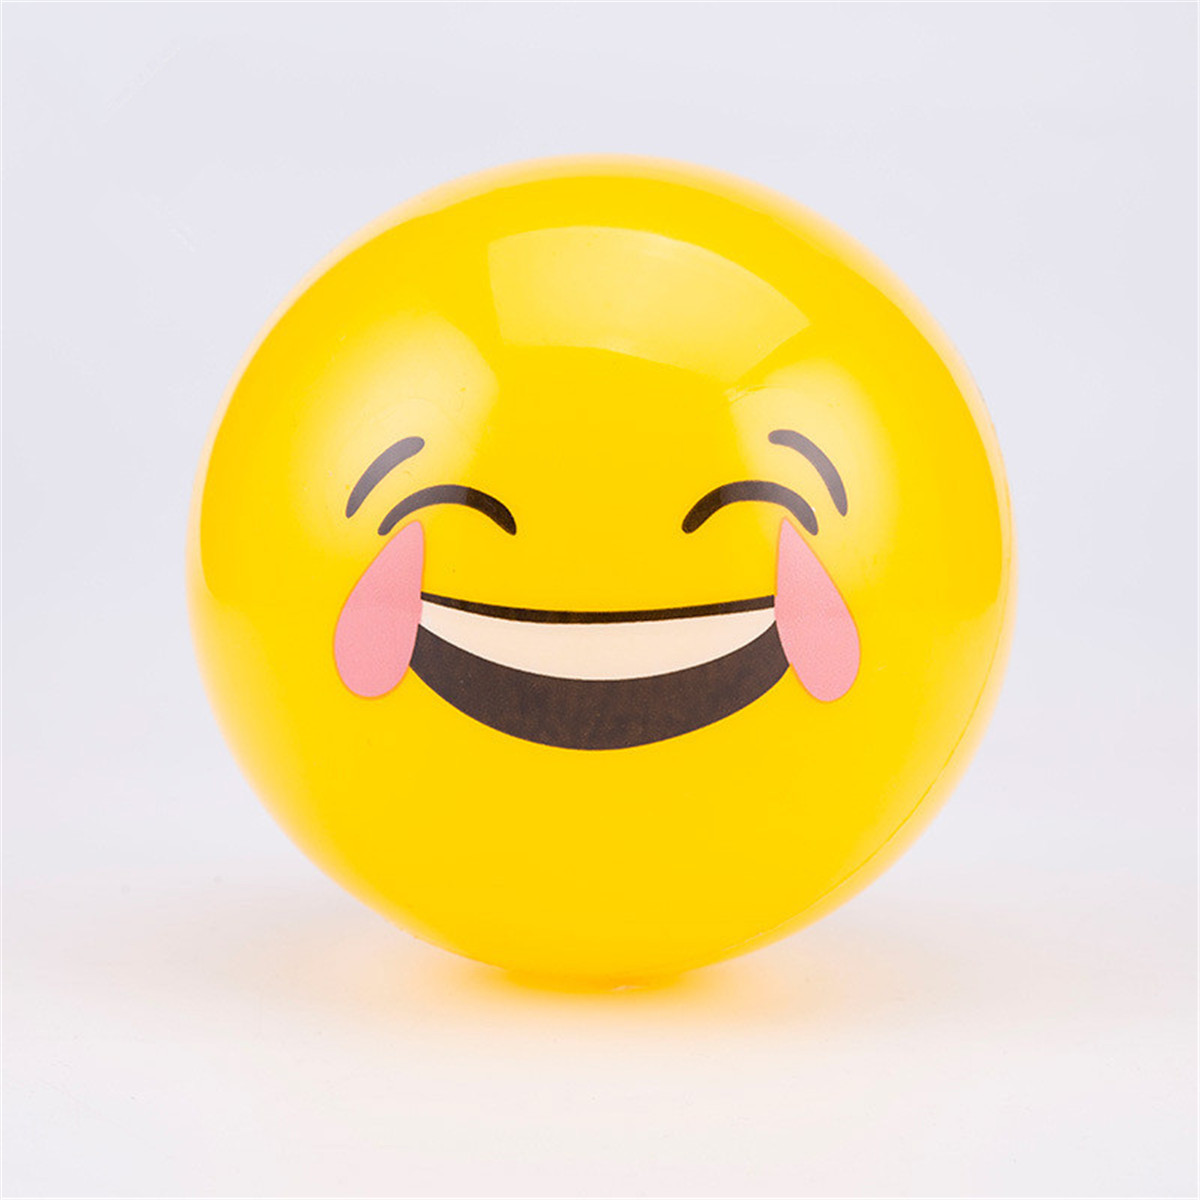 69inch-PVC-Emoji-Beach-Balls-Inflatable-Soft-Ball-KidsampAdult-Water-Play-Pool-Party-Toys-1188844